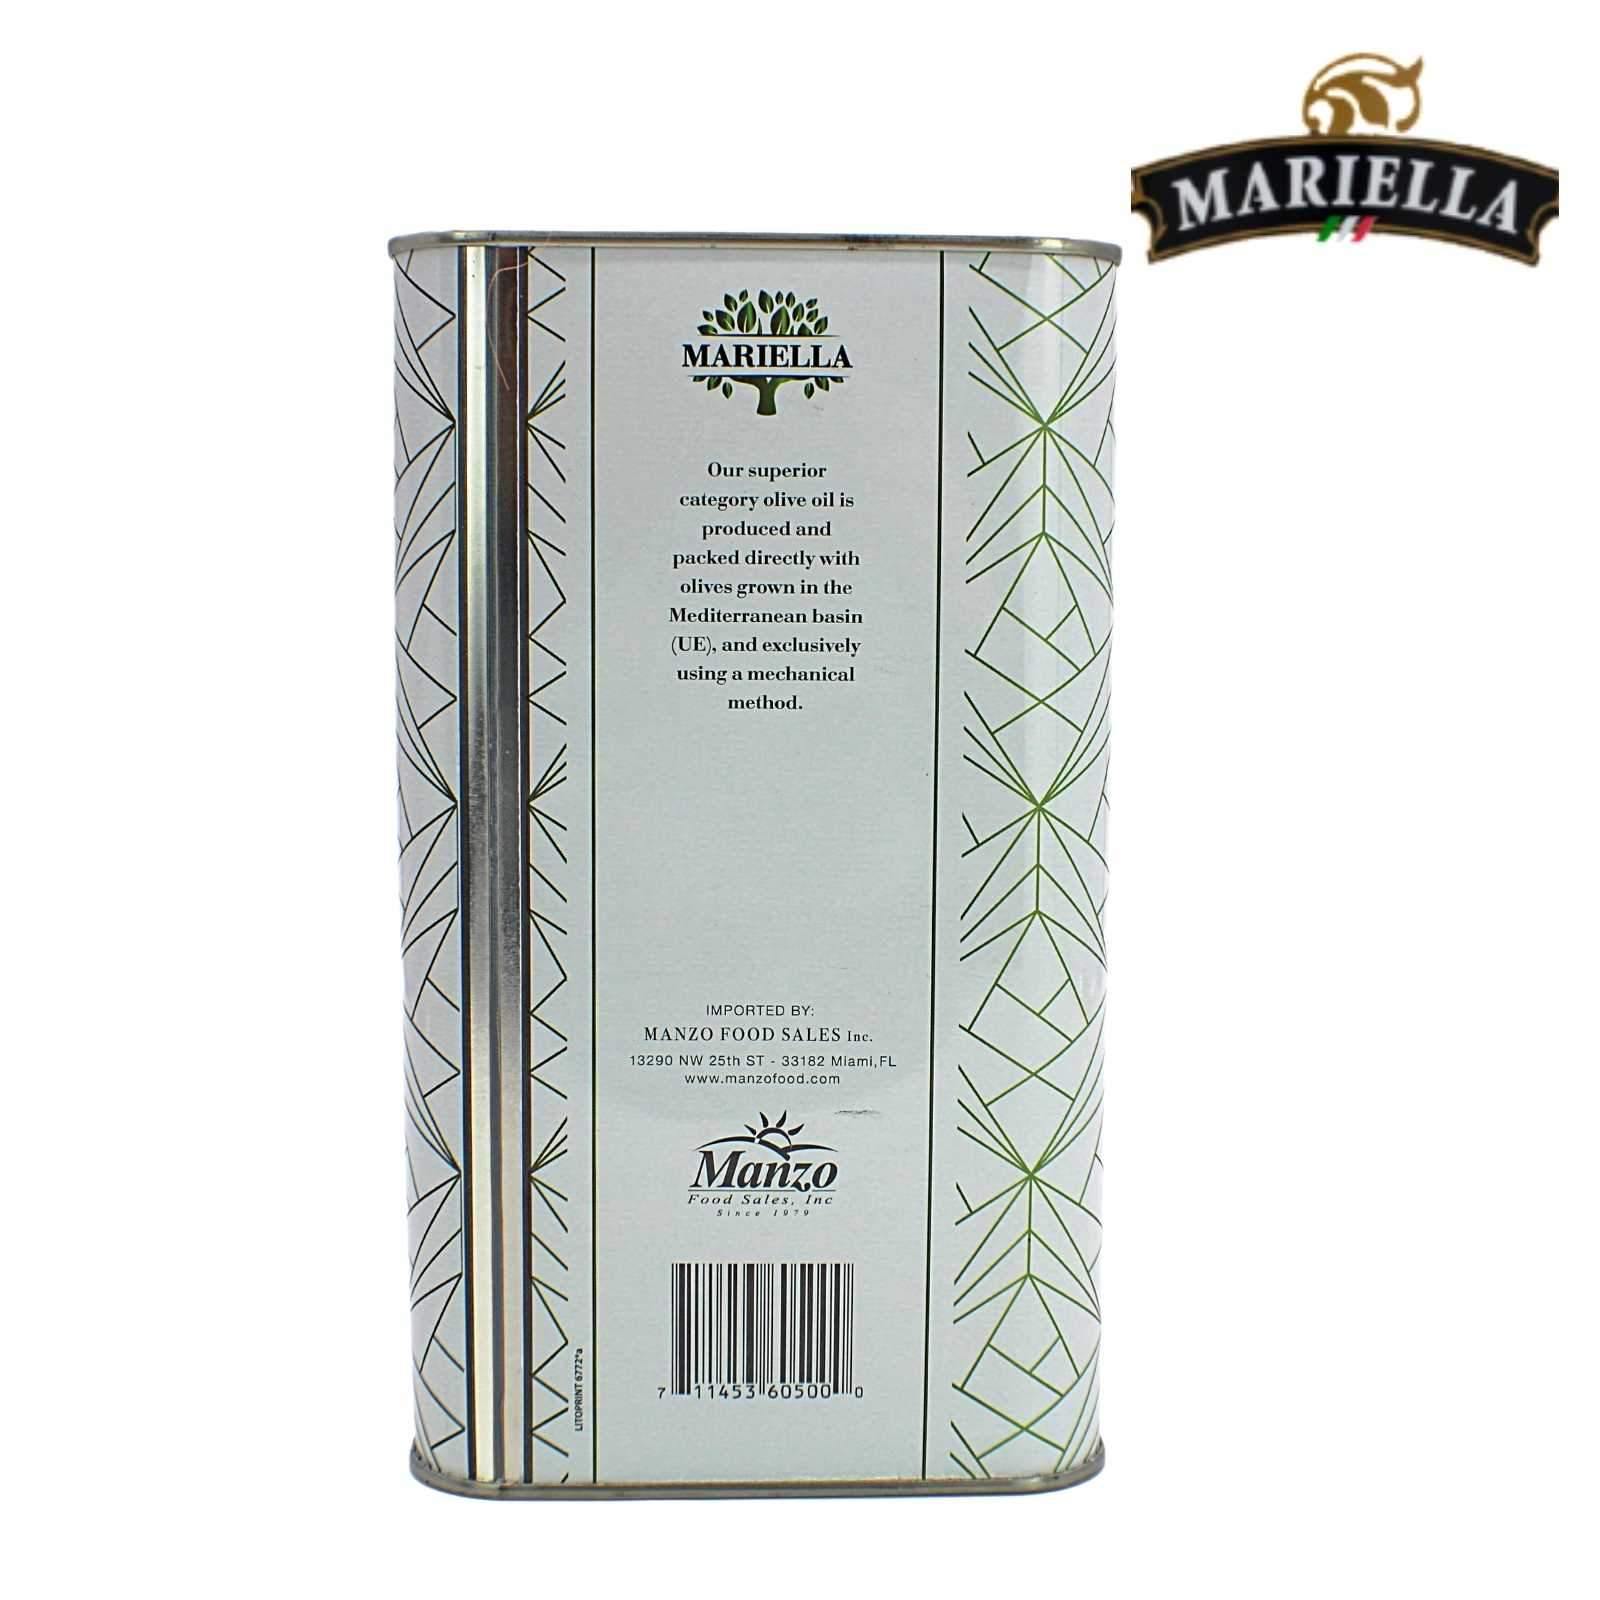 Mariella Extra Virgin Olive Oil - 3L - Wholesale Italian Food